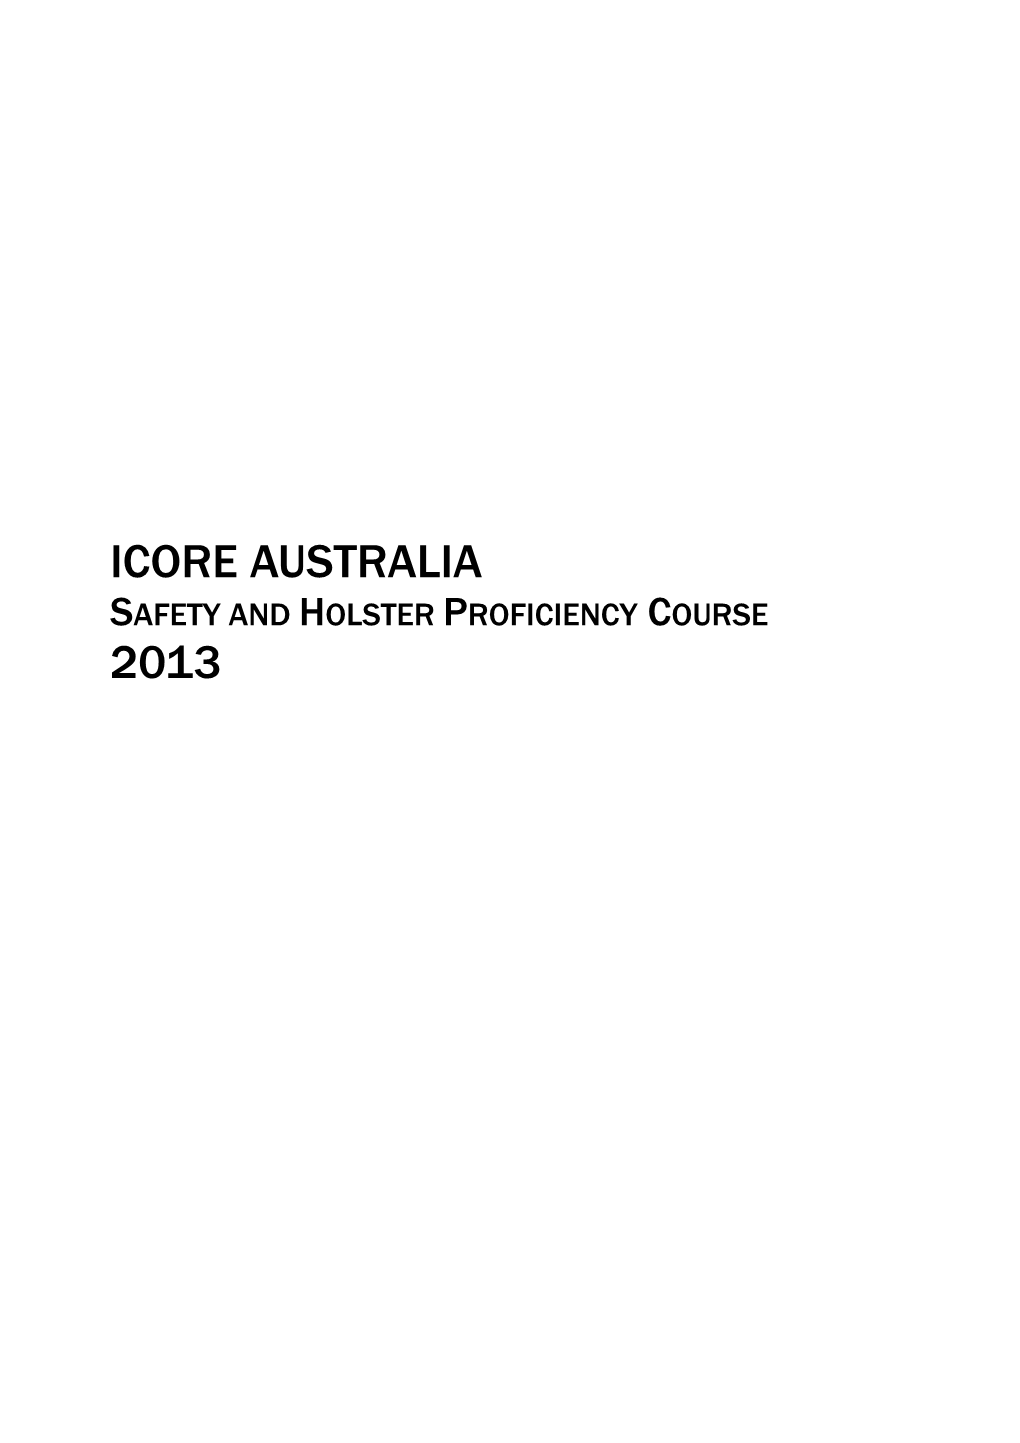 Icore Australia